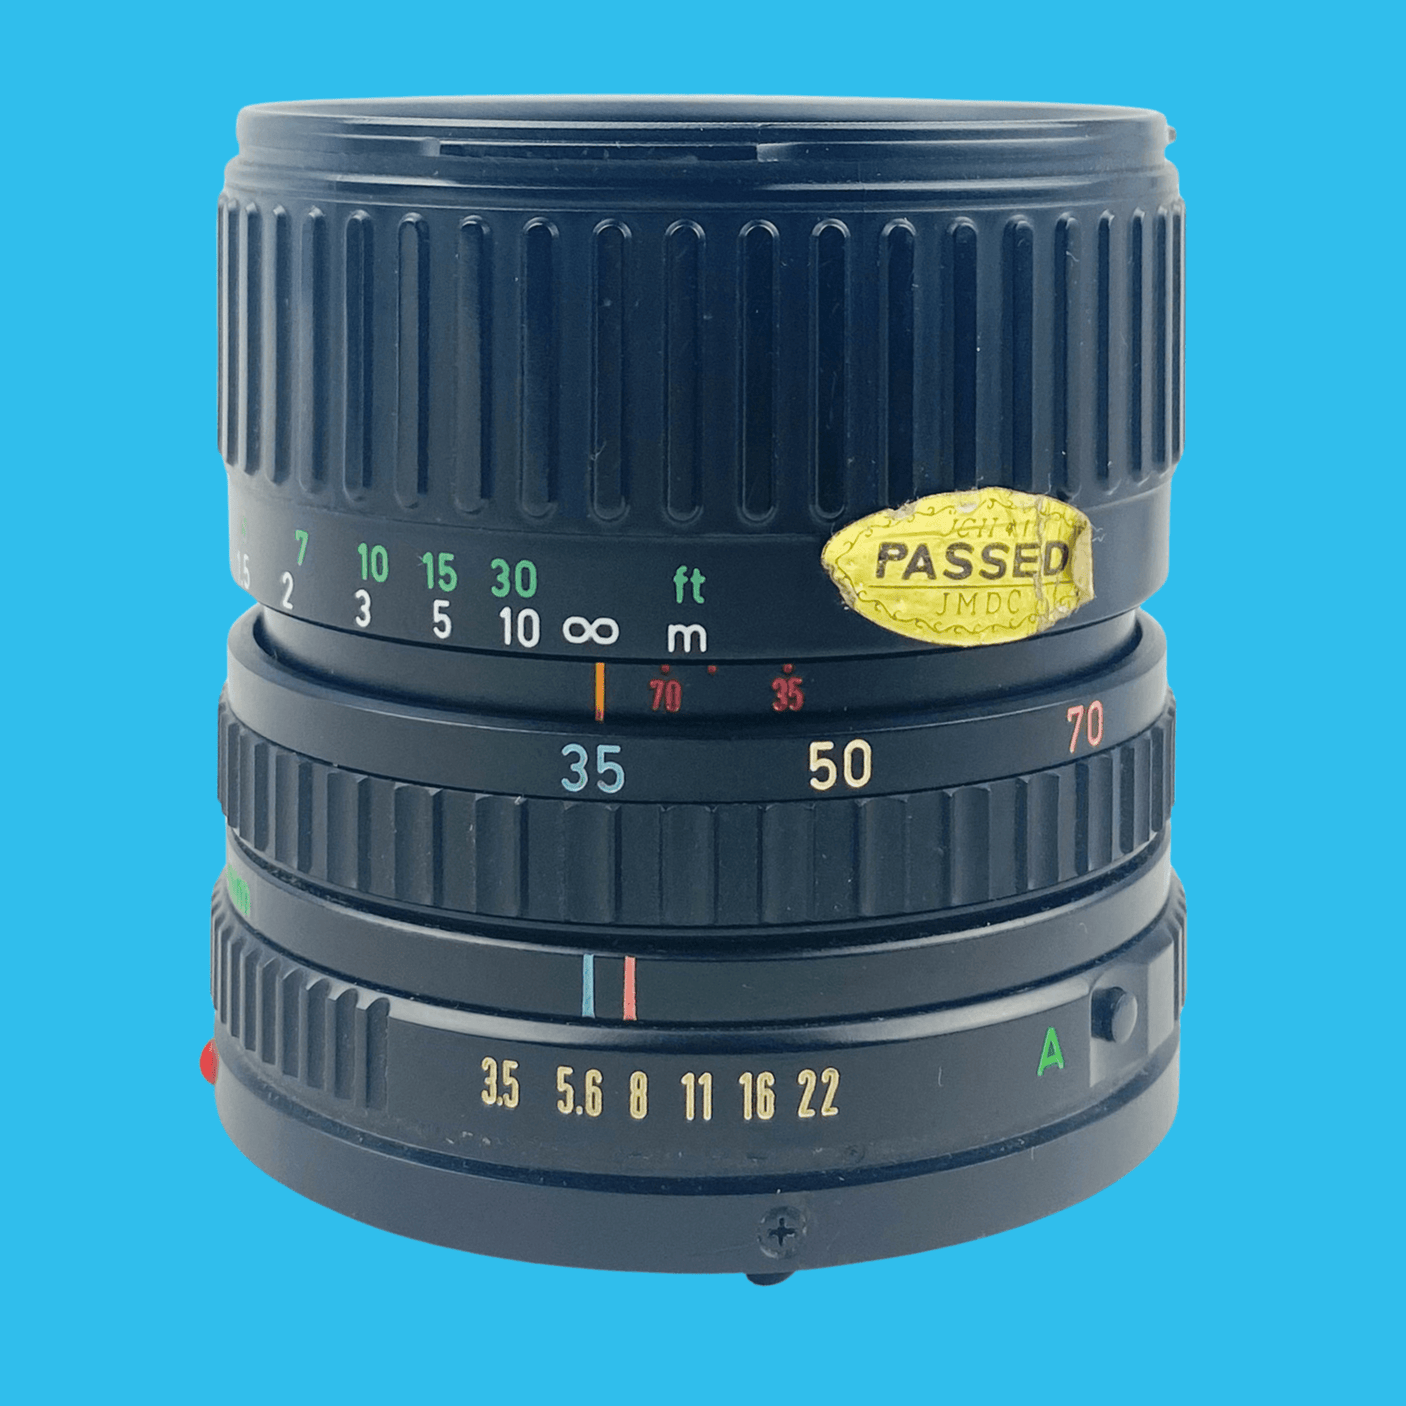 Canon FD Macro 35-70mm F3.5/4.5 Lens.